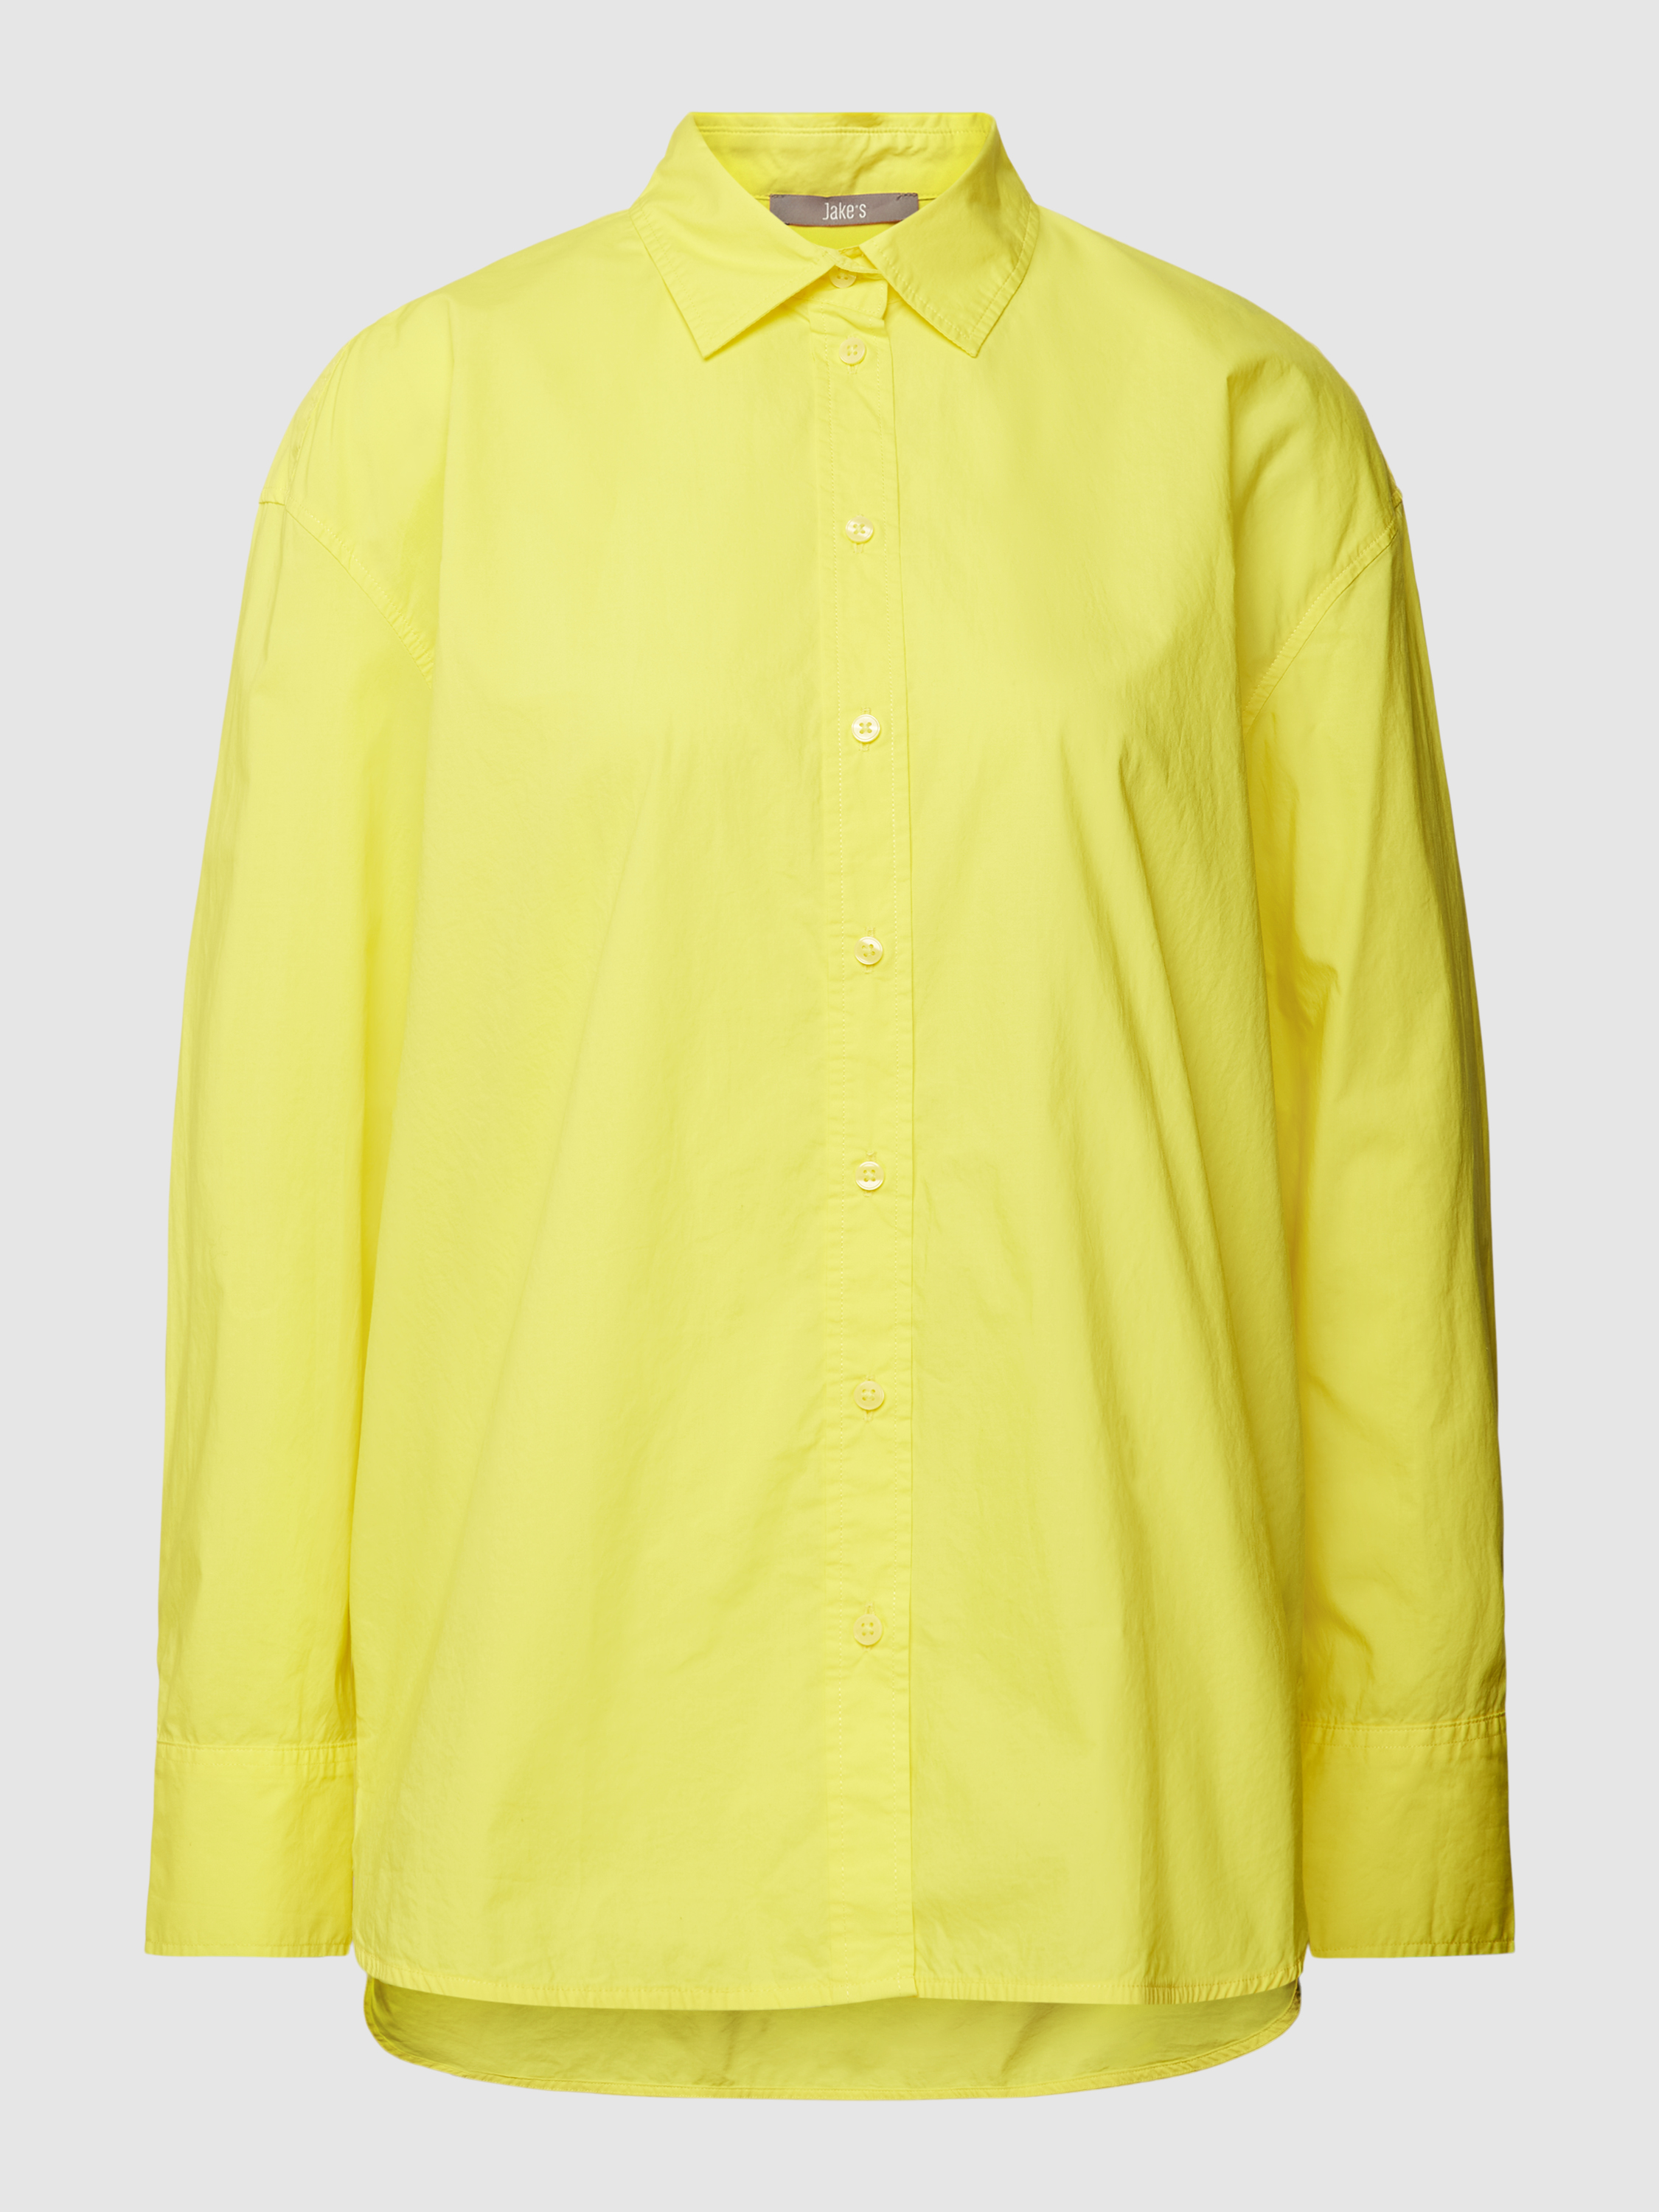 Рубашка женская Jake's Collection 1754770 желтая 40 (доставка из-за рубежа)